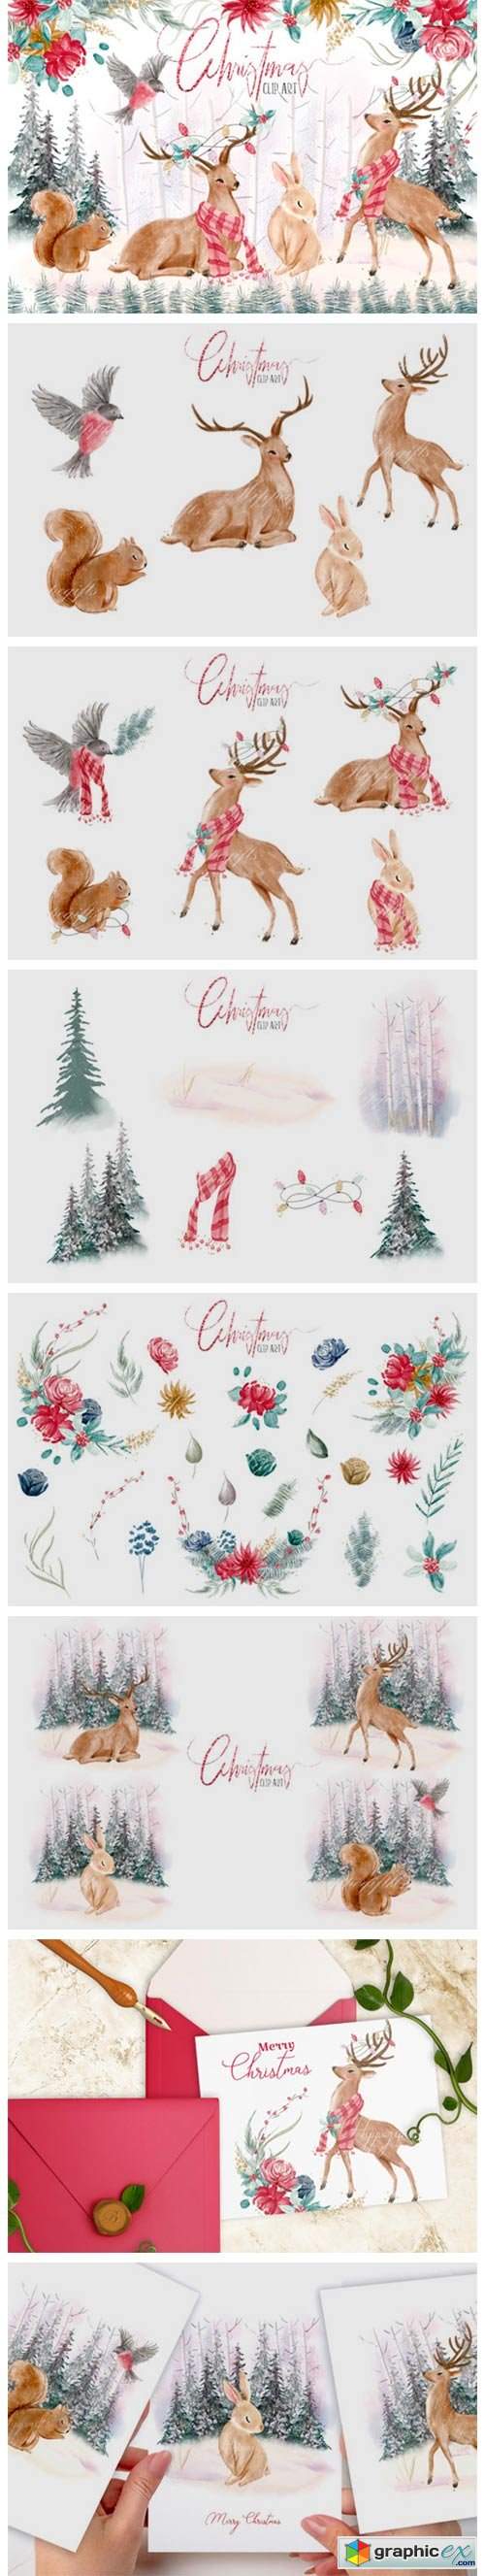  Woodland Christmas Illustrations 